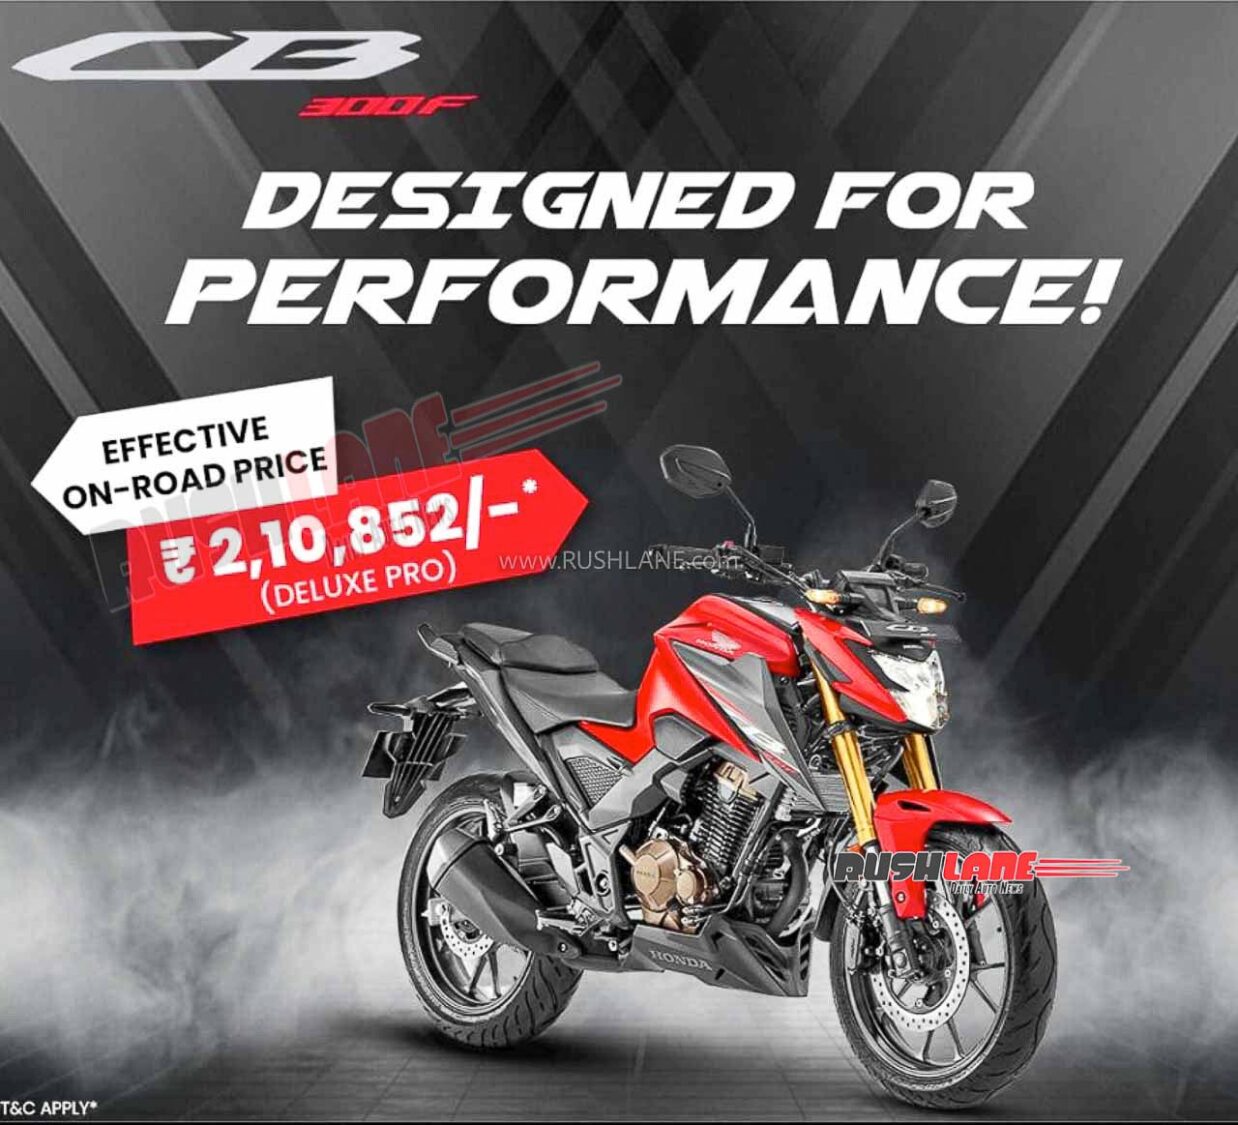 Honda CB300F Price Cut